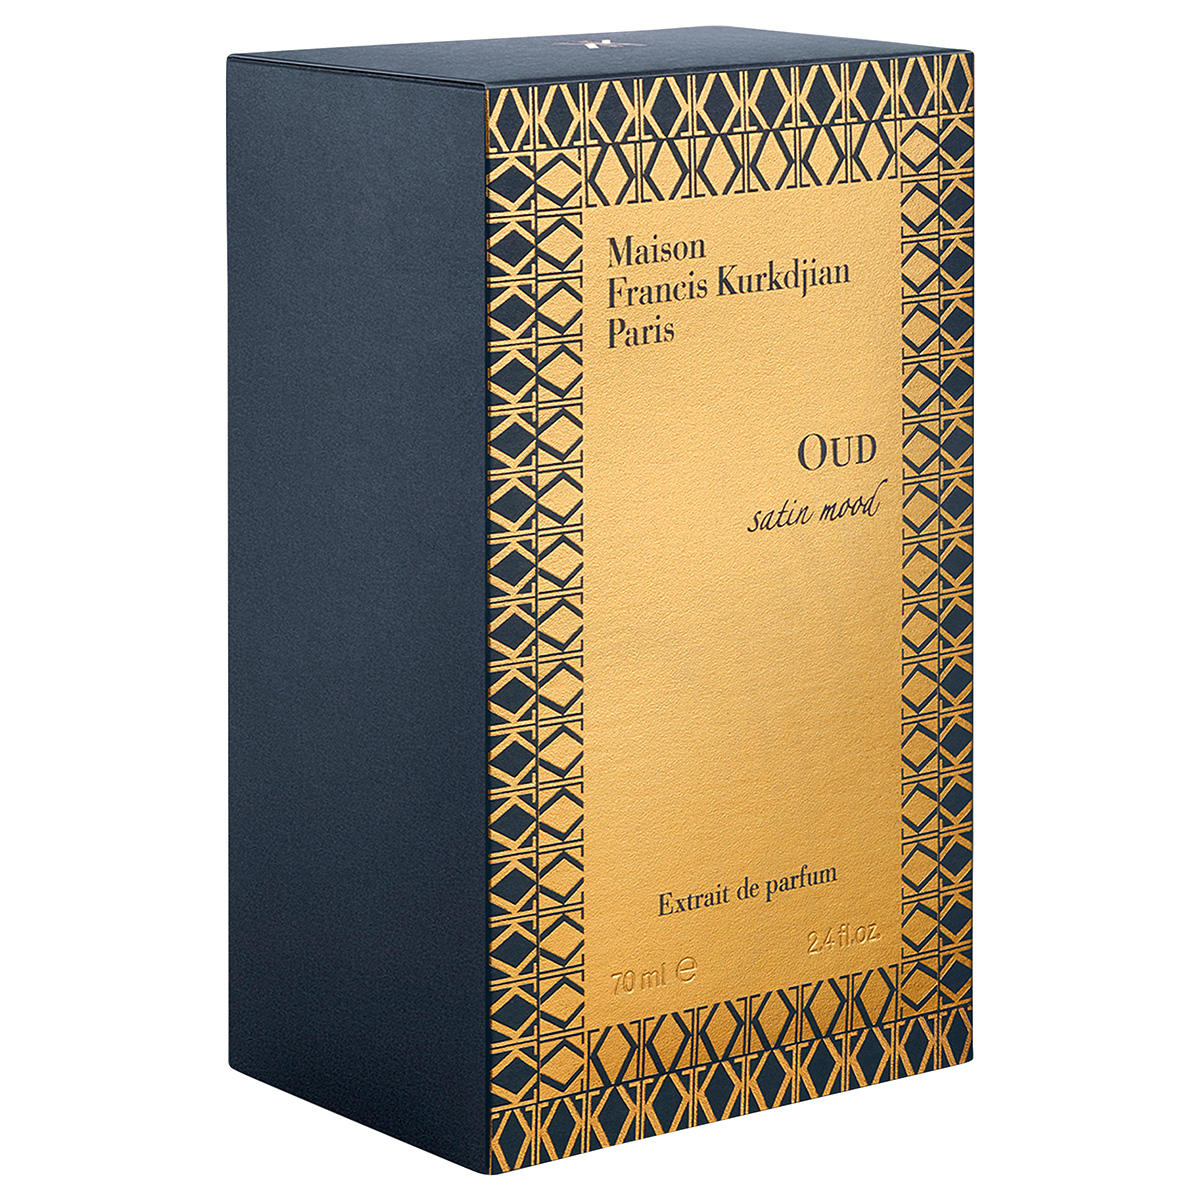 Maison Francis Kurkdjian Paris Oud satin mood Extrait de Parfum 70 ml - 4